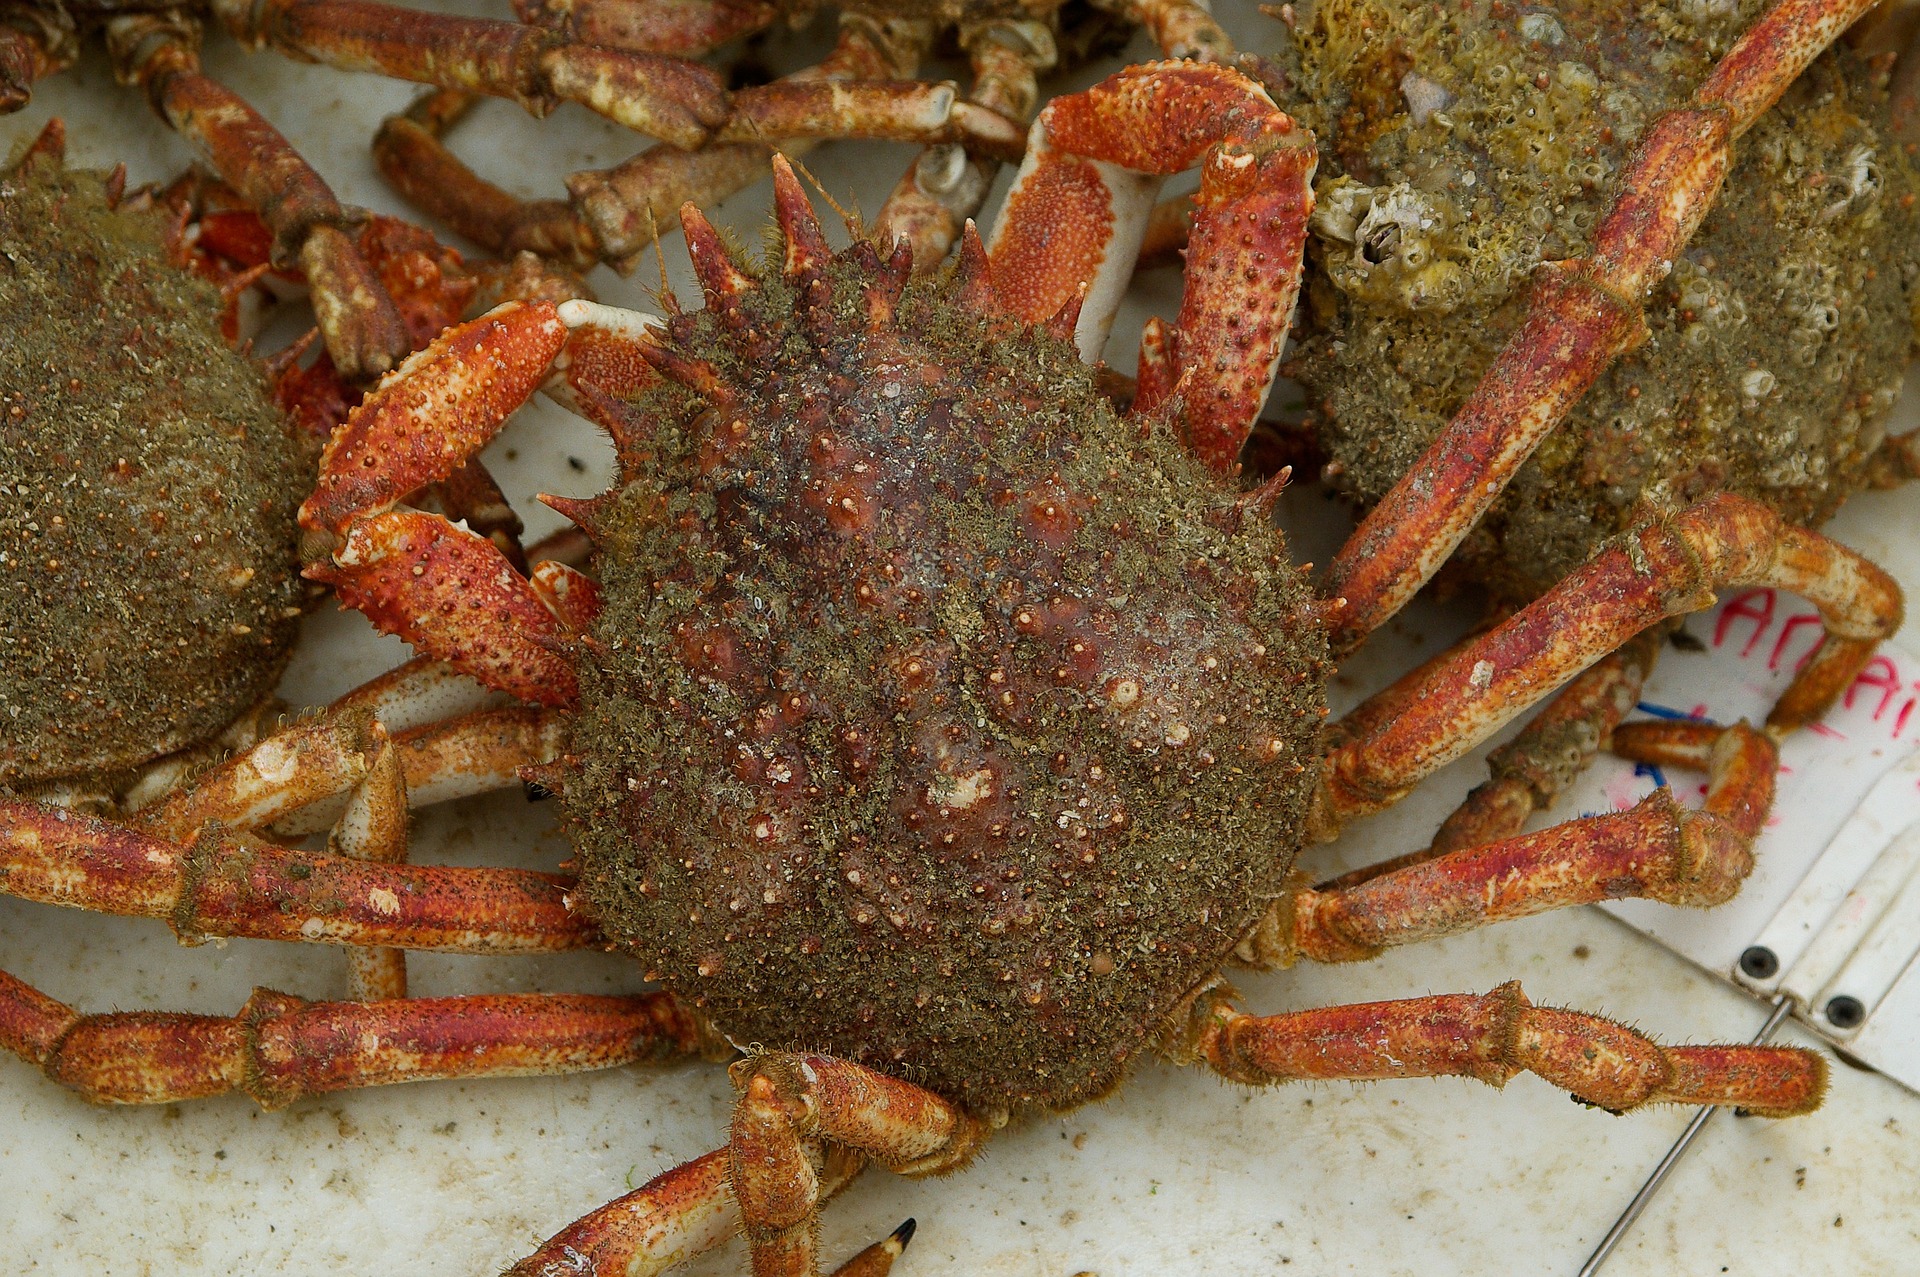 crab-1099155_1920-jpg.974272